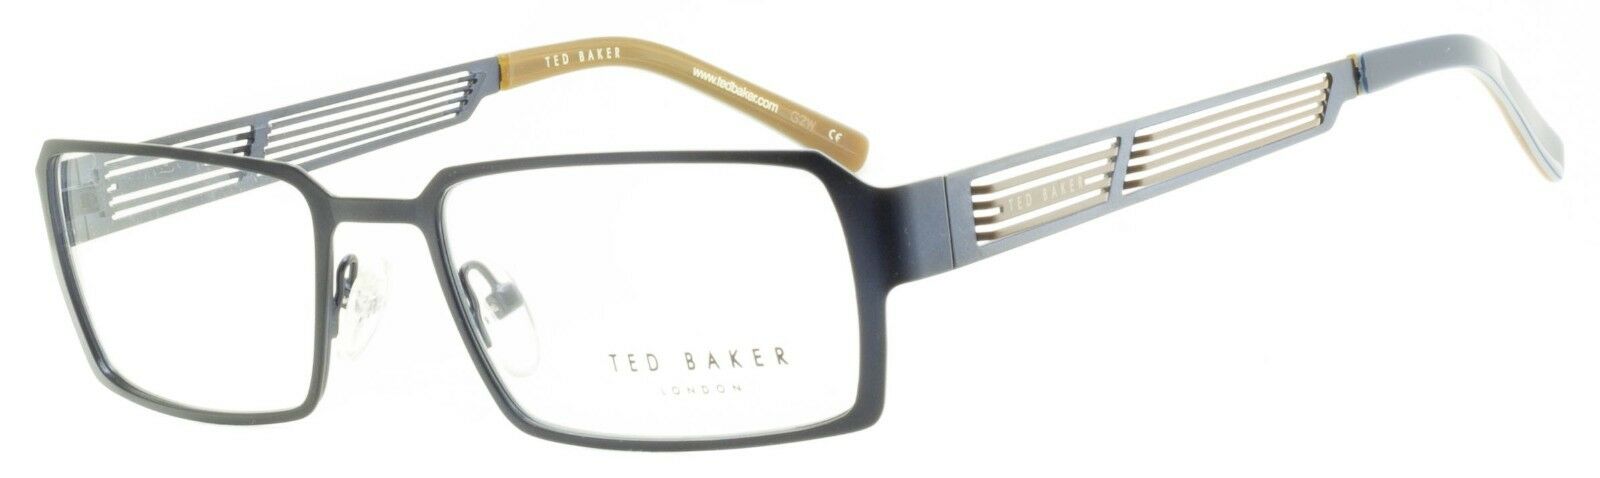 TED BAKER Straight A's 4178 618 Eyewear FRAMES Glasses Eyeglasses RX Optical-New